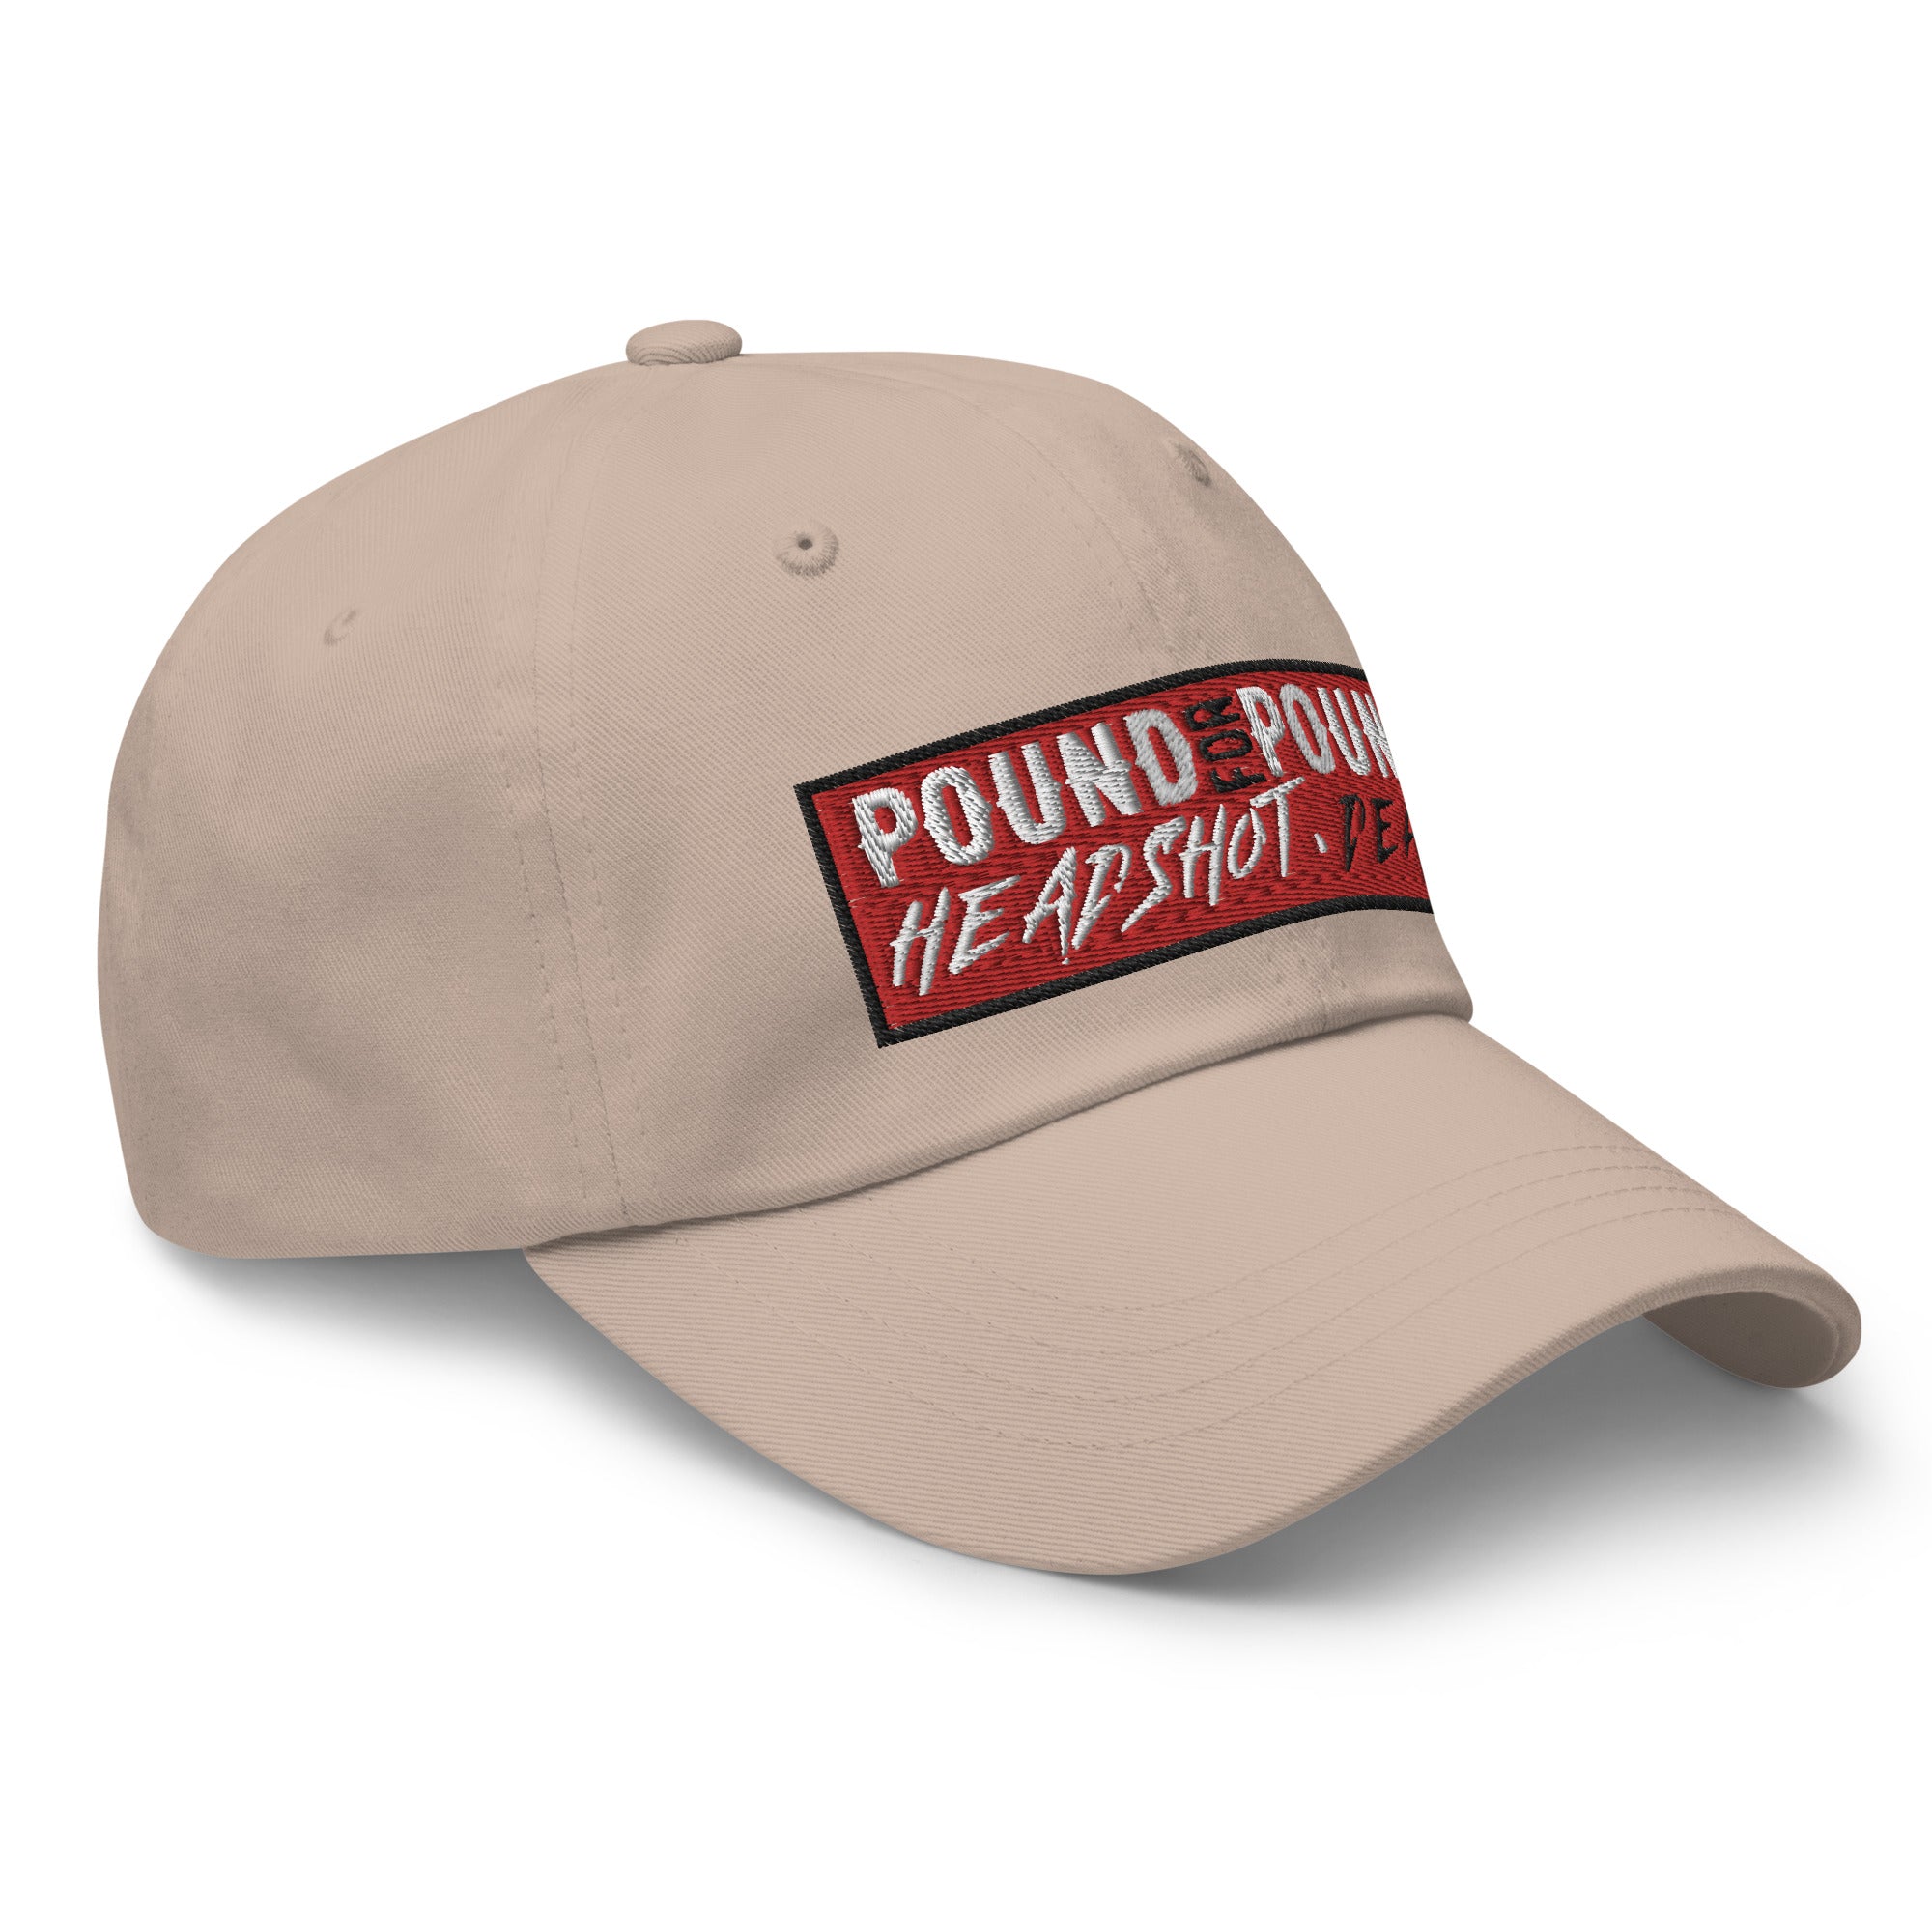 Pound for Pound. Headshot. DEAD! Premium Embroidered MMA Hat